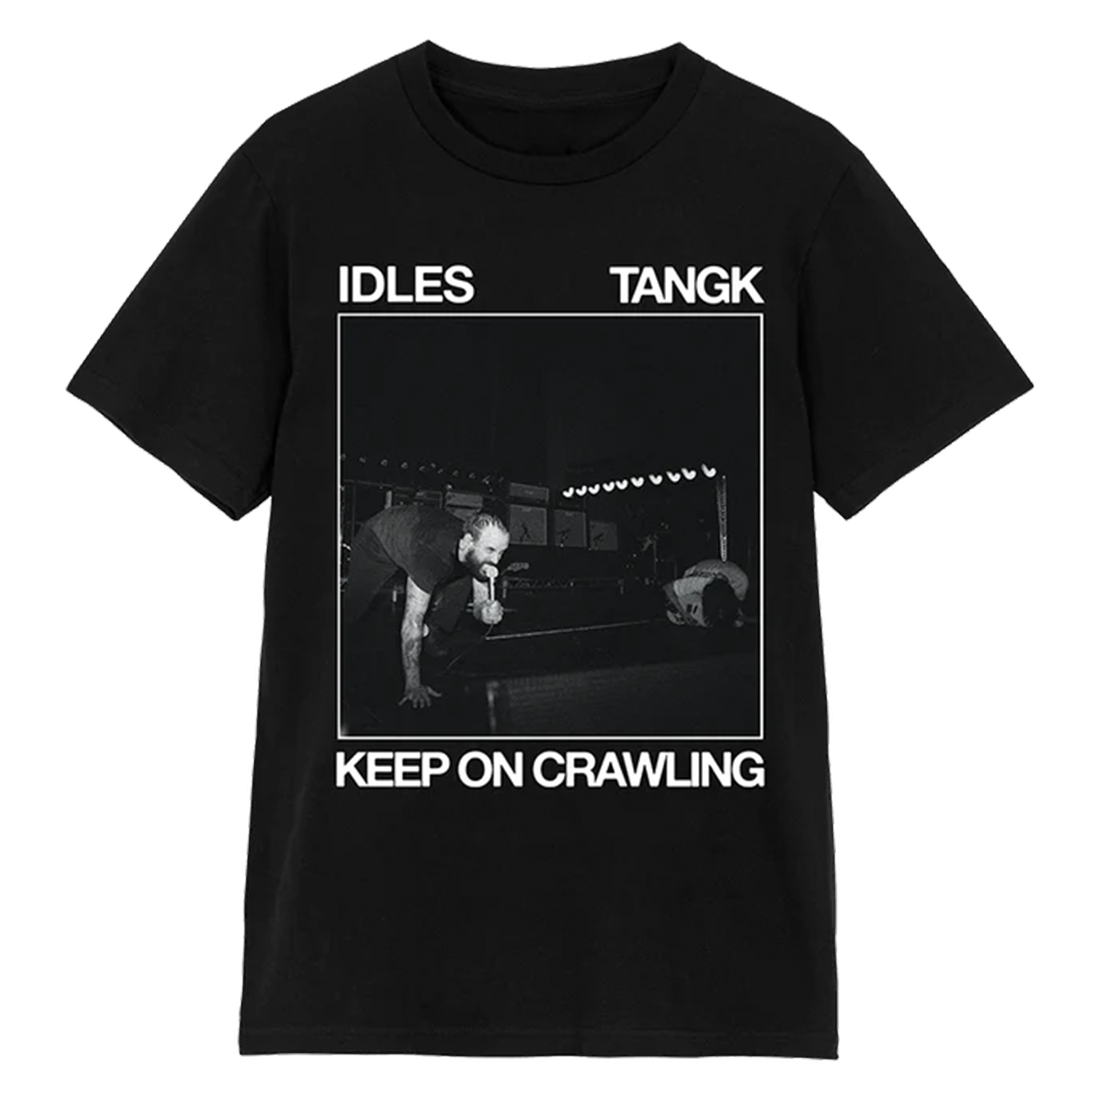 IDLES - Keep On Crawling T-Shirt